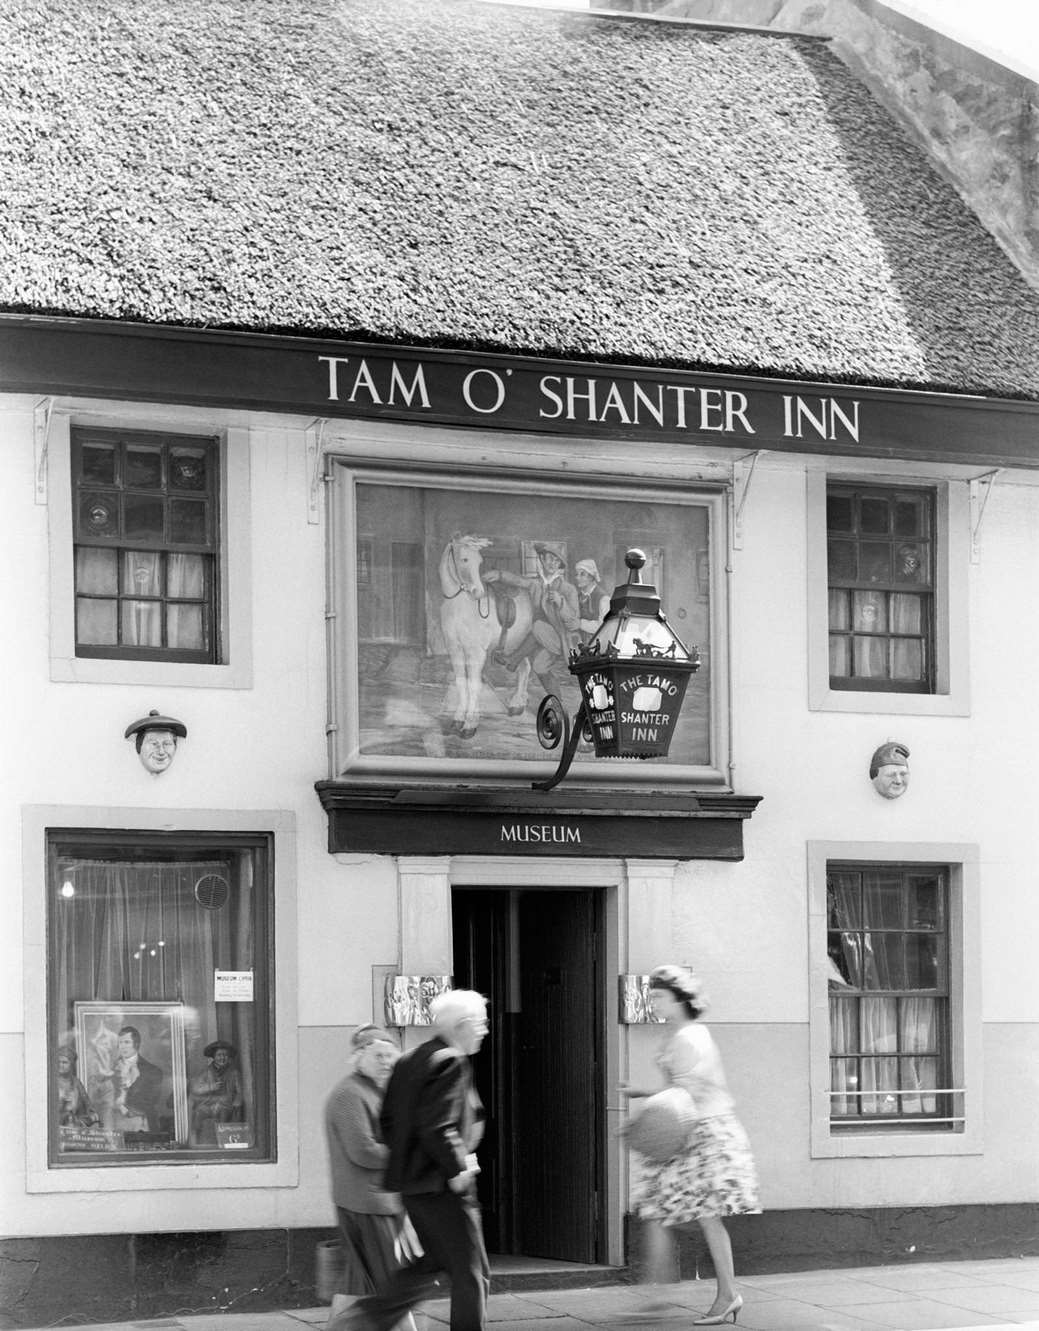 Tam O' Shanter inn' in Ayr, 1960s